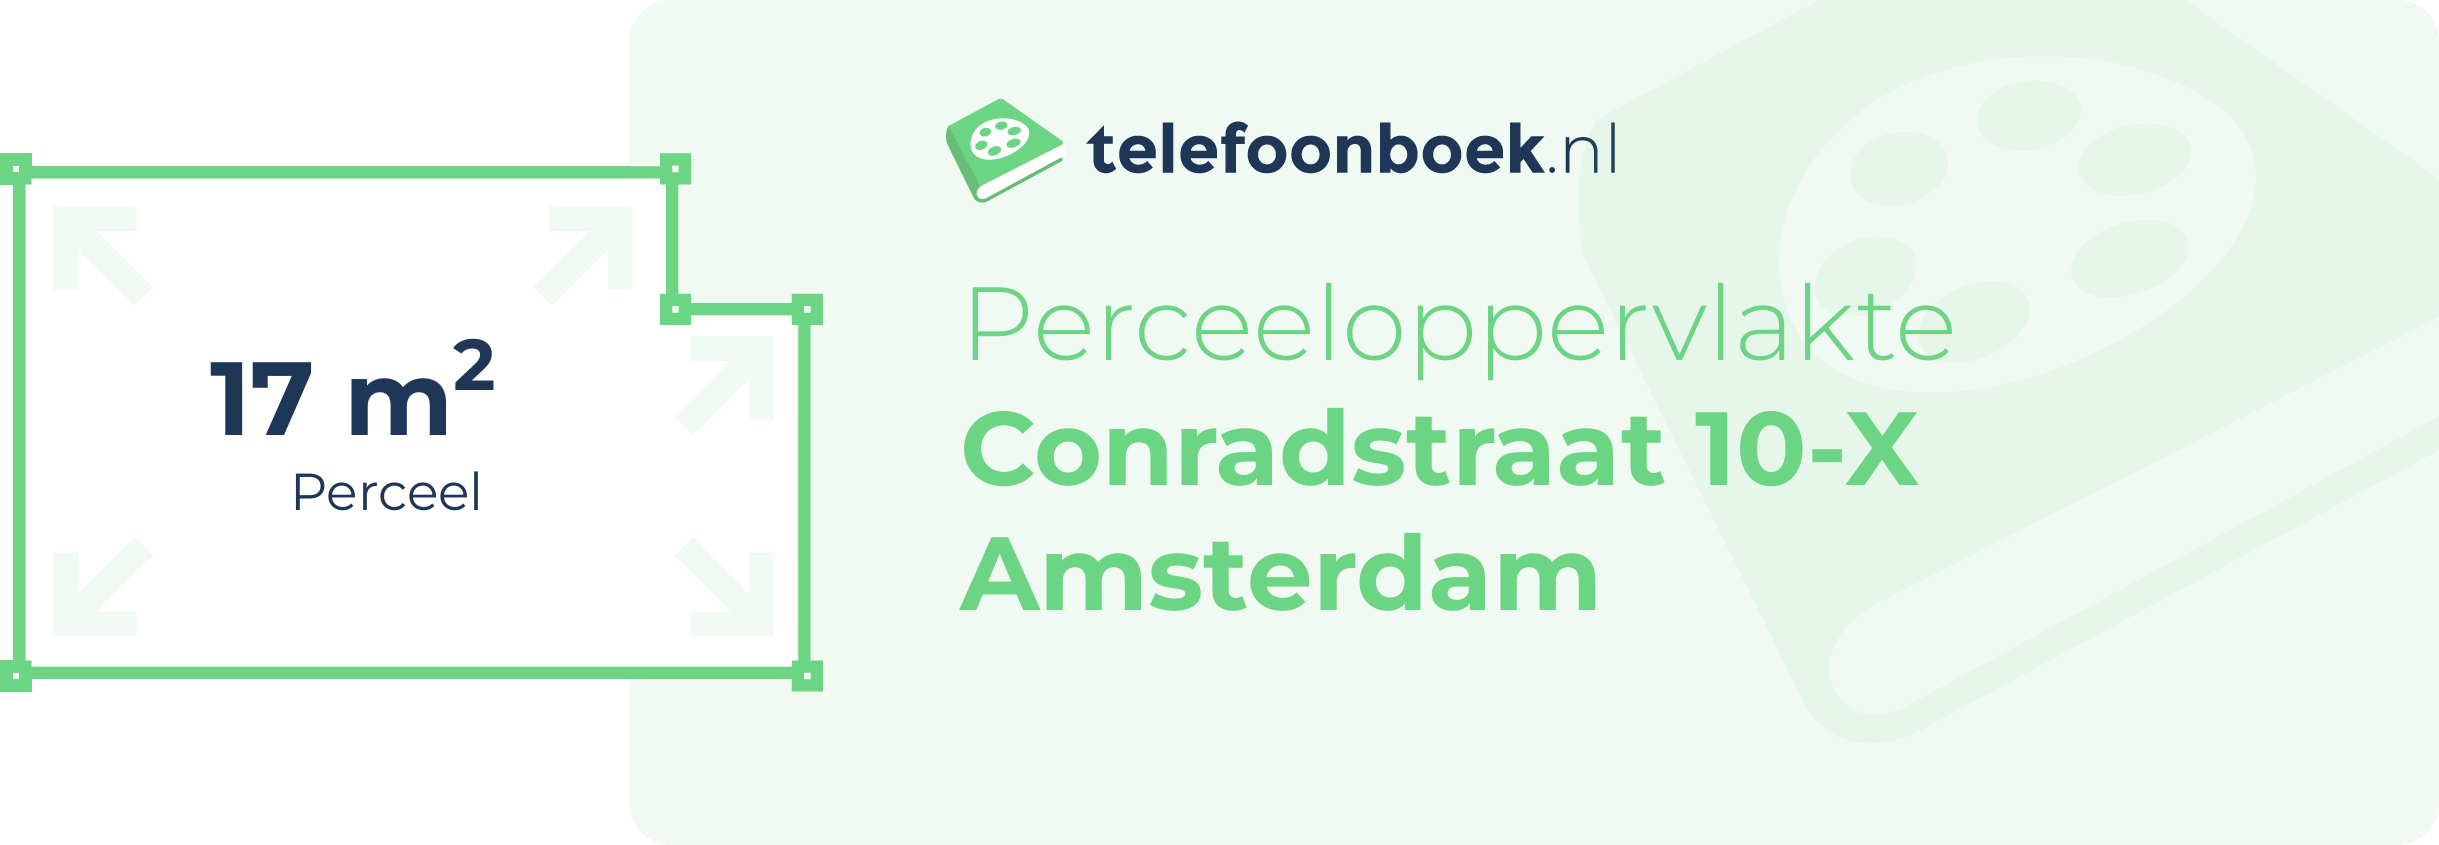 Perceeloppervlakte Conradstraat 10-X Amsterdam